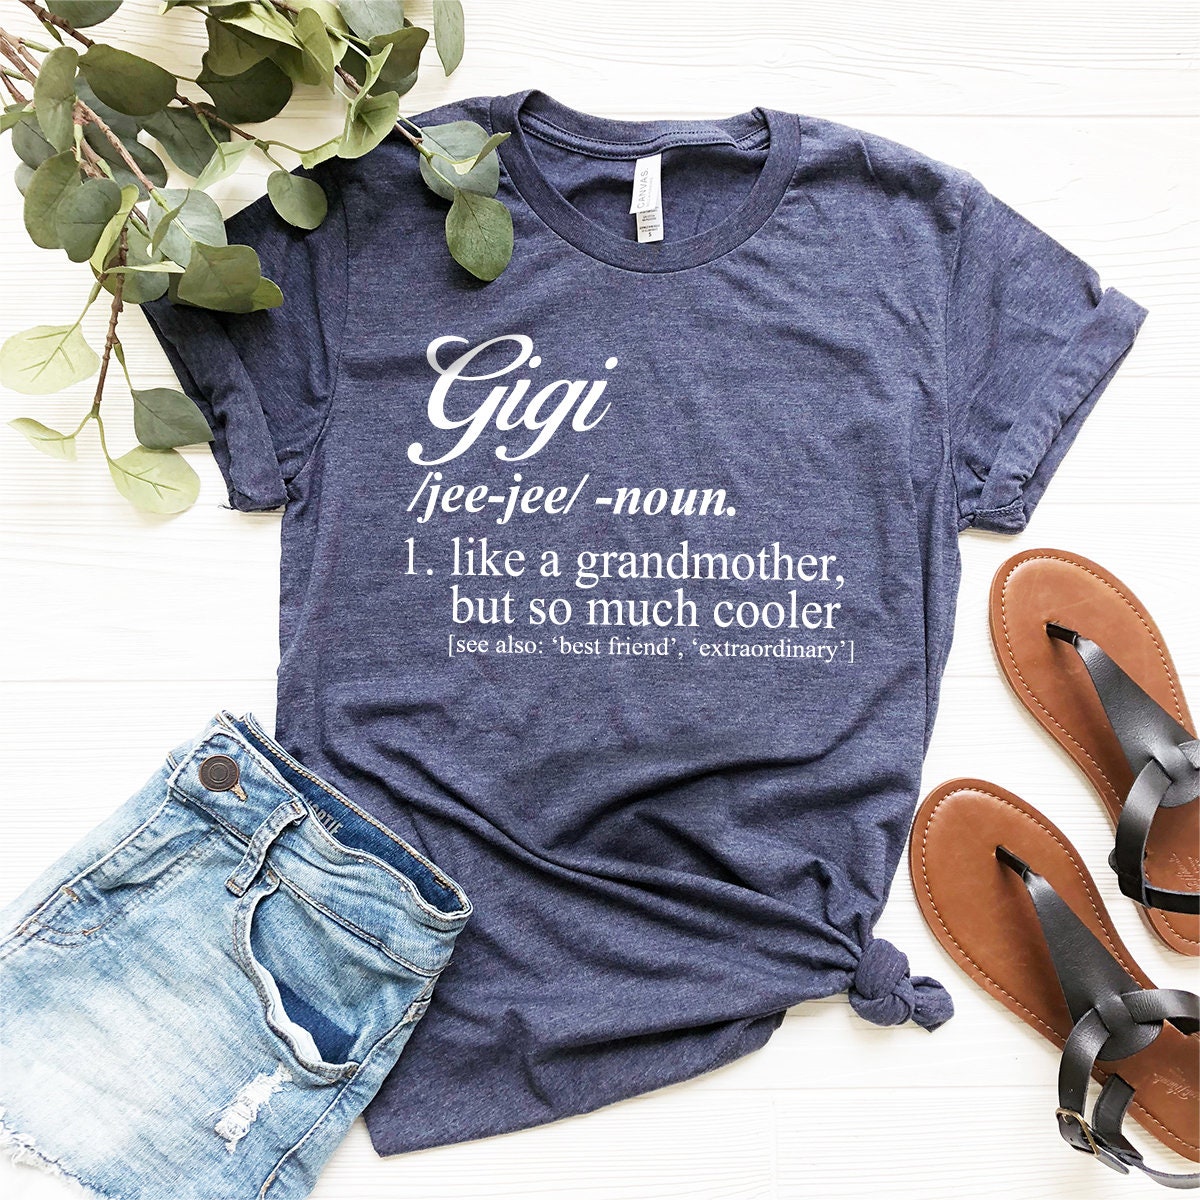 Gigi Definition Shirt, Gift For Grandma, Gigi T-Shirt, Grandma Shirt, Cool Nana Shirt, Grandma Gift, Mother's Day Gift, Grandmother Shirt - Fastdeliverytees.com